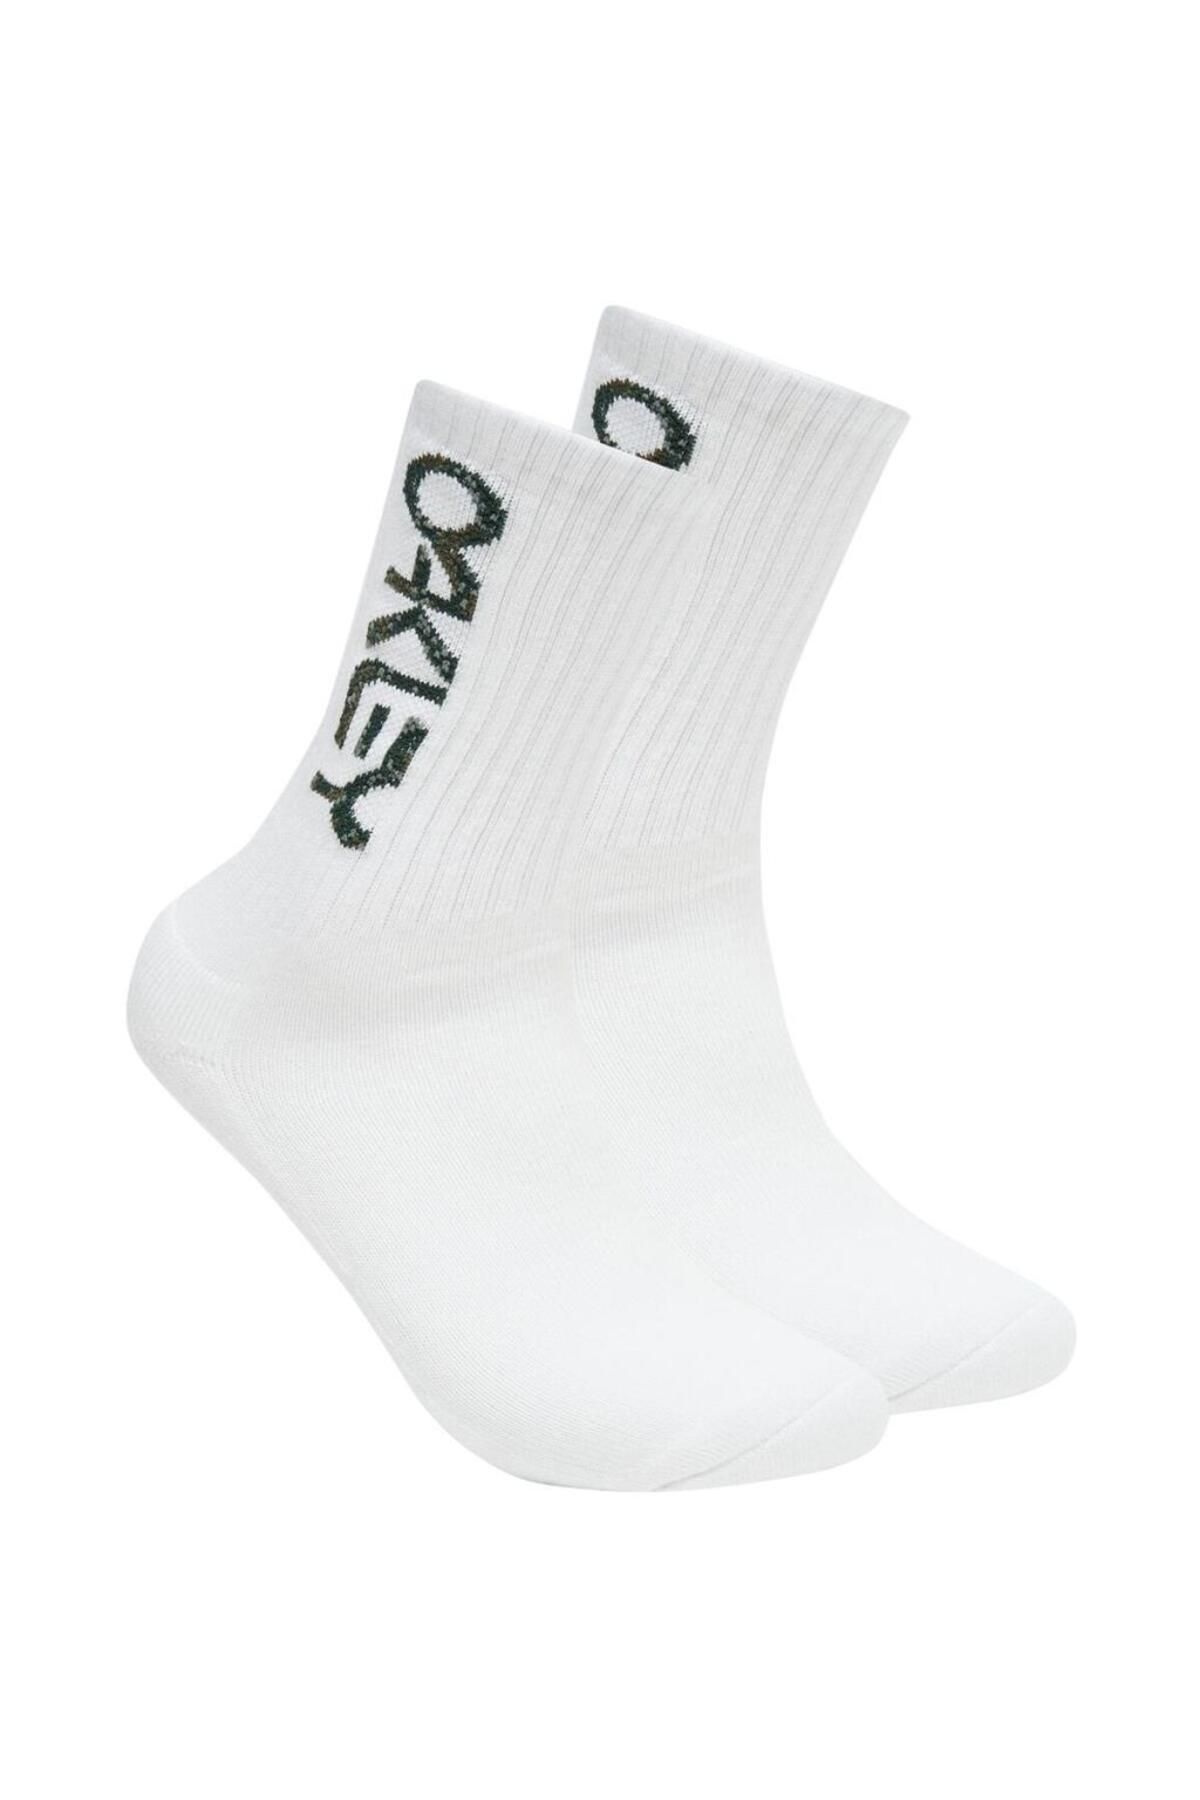 Oakley B1B 2.0 3'lü Çorap Seti FOS900277 100